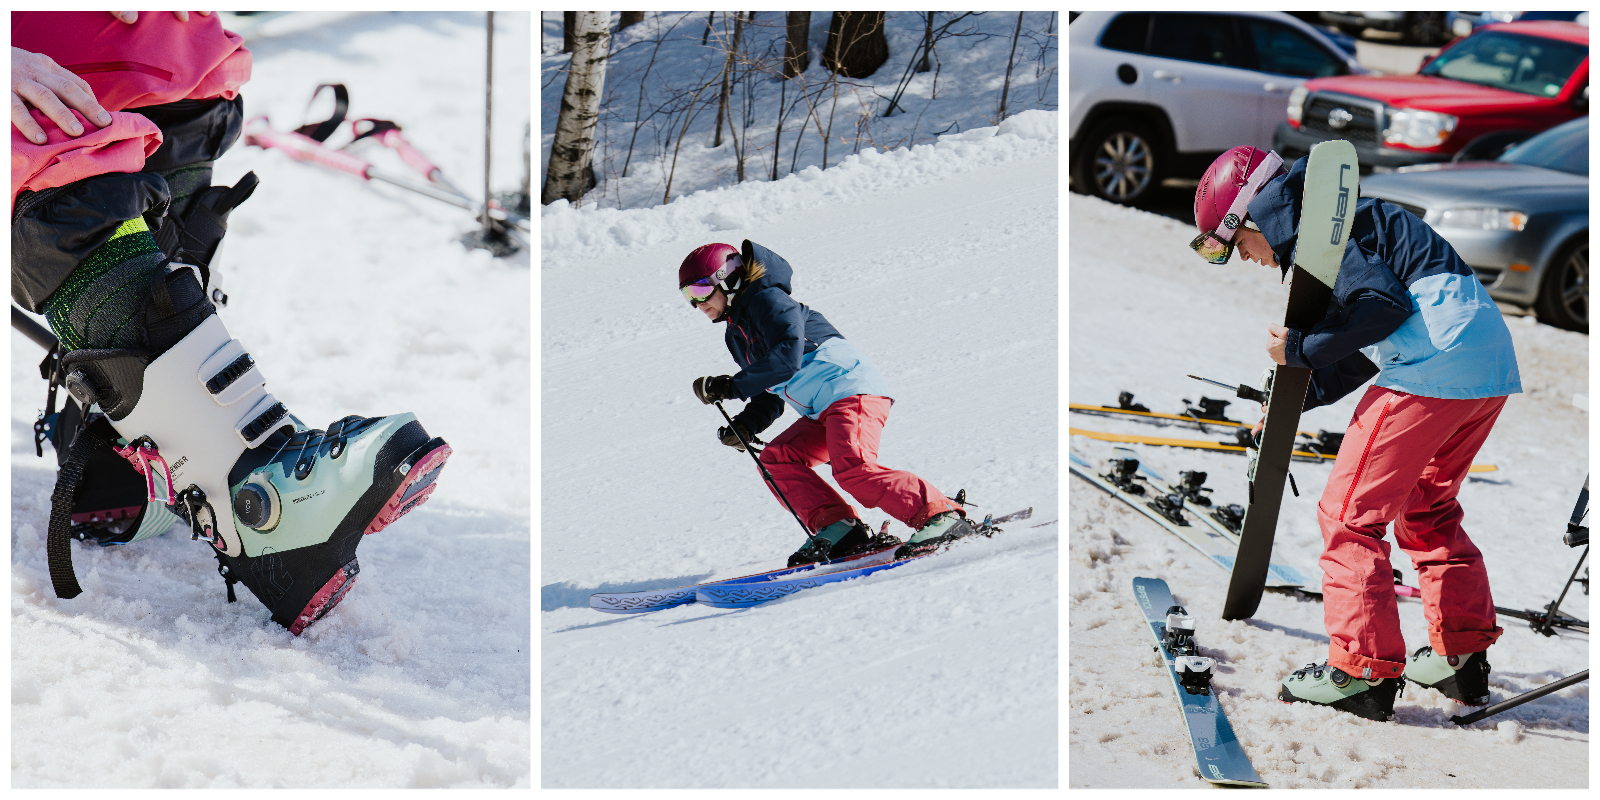 TSM, The Ski Monster, skiing, ski test, ski demo, Ladies Day, Lady Monsters, Goldbergh, Sunapee, winter, snow, New Hampshire, gear test